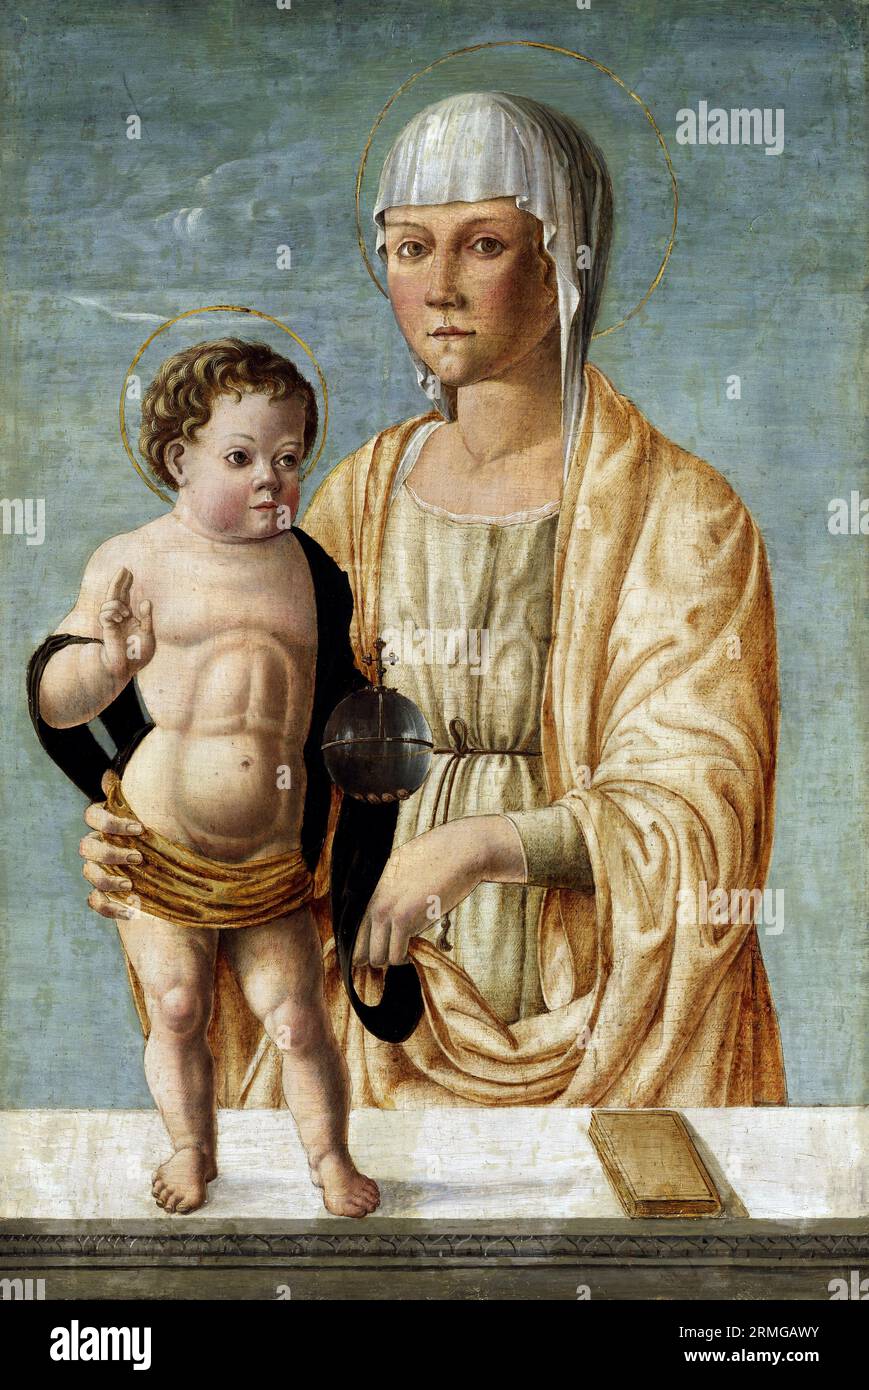 Madonna and Child by the early Italian Renaissance artist Bono da Ferrara or Bono Ferrarese (active 1441–1461), tempera on wood, c. 1440-50 Stock Photo